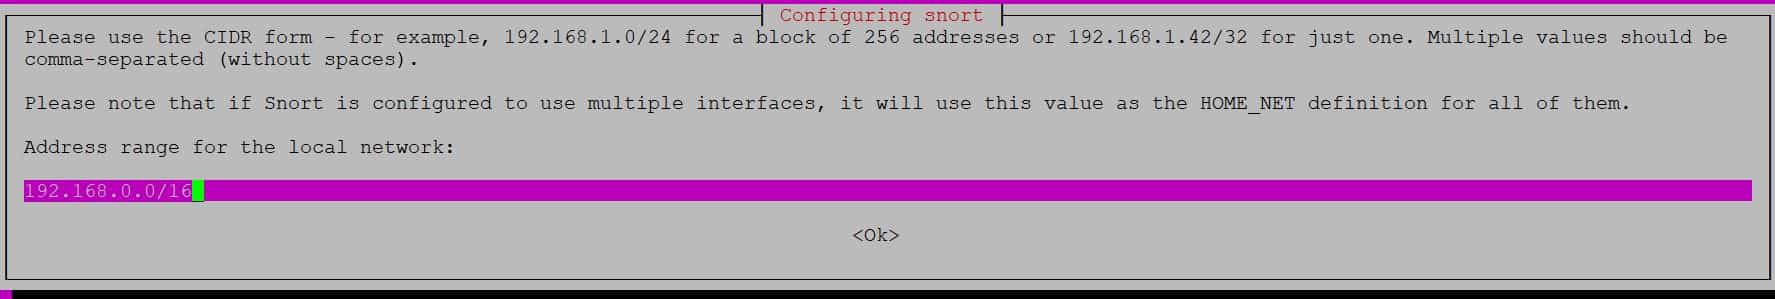 How to Install Snort on Ubuntu 20.04 LTS (Focal Fossa) 3